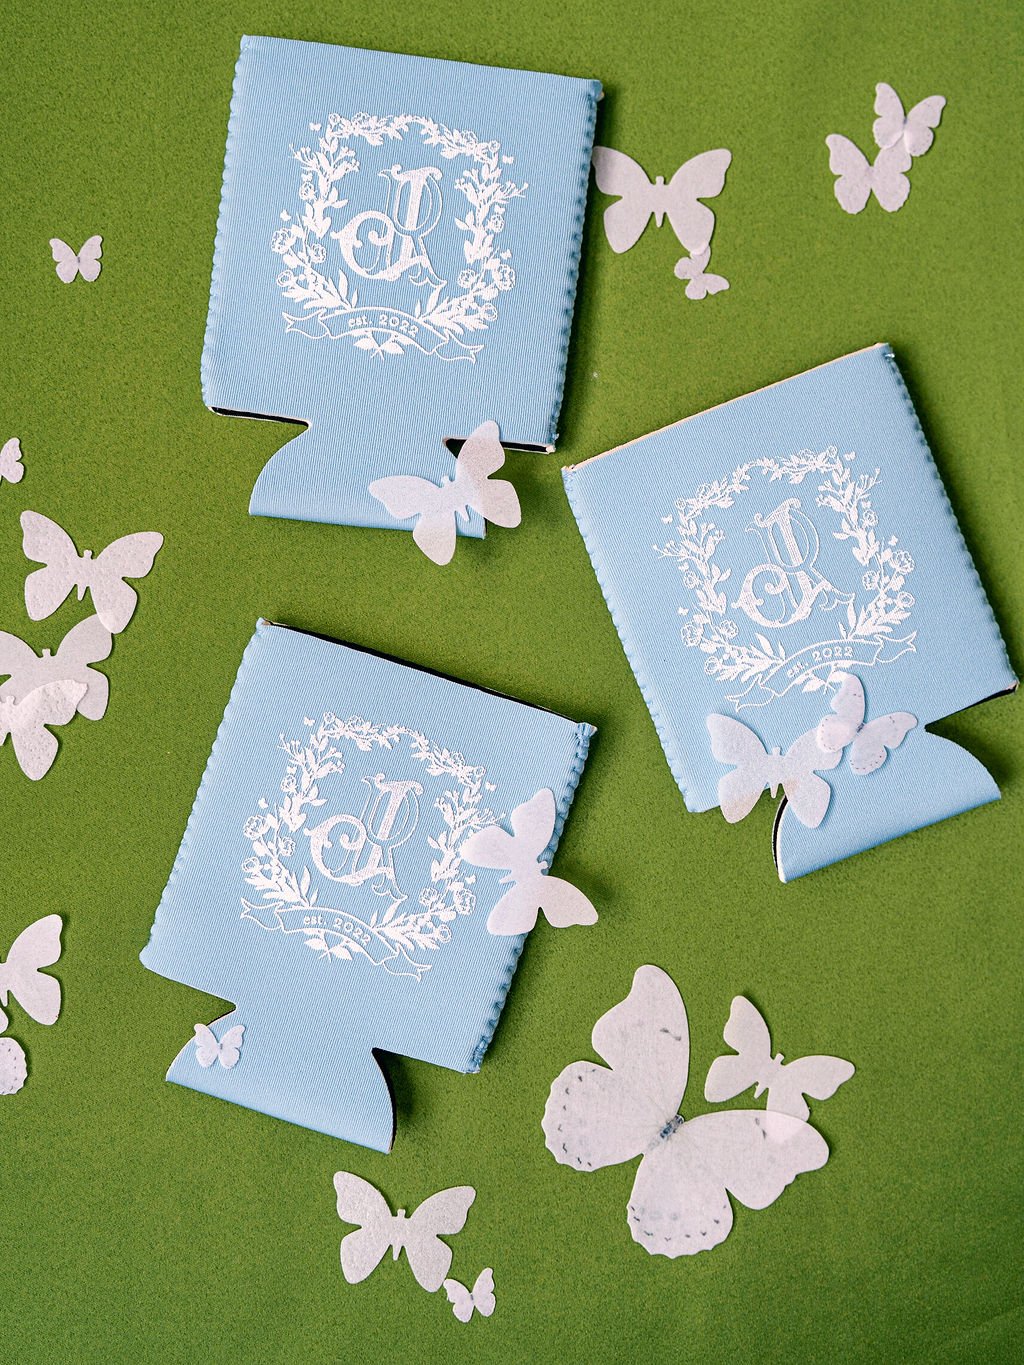 butterfly theme wedding koozies custom monogram